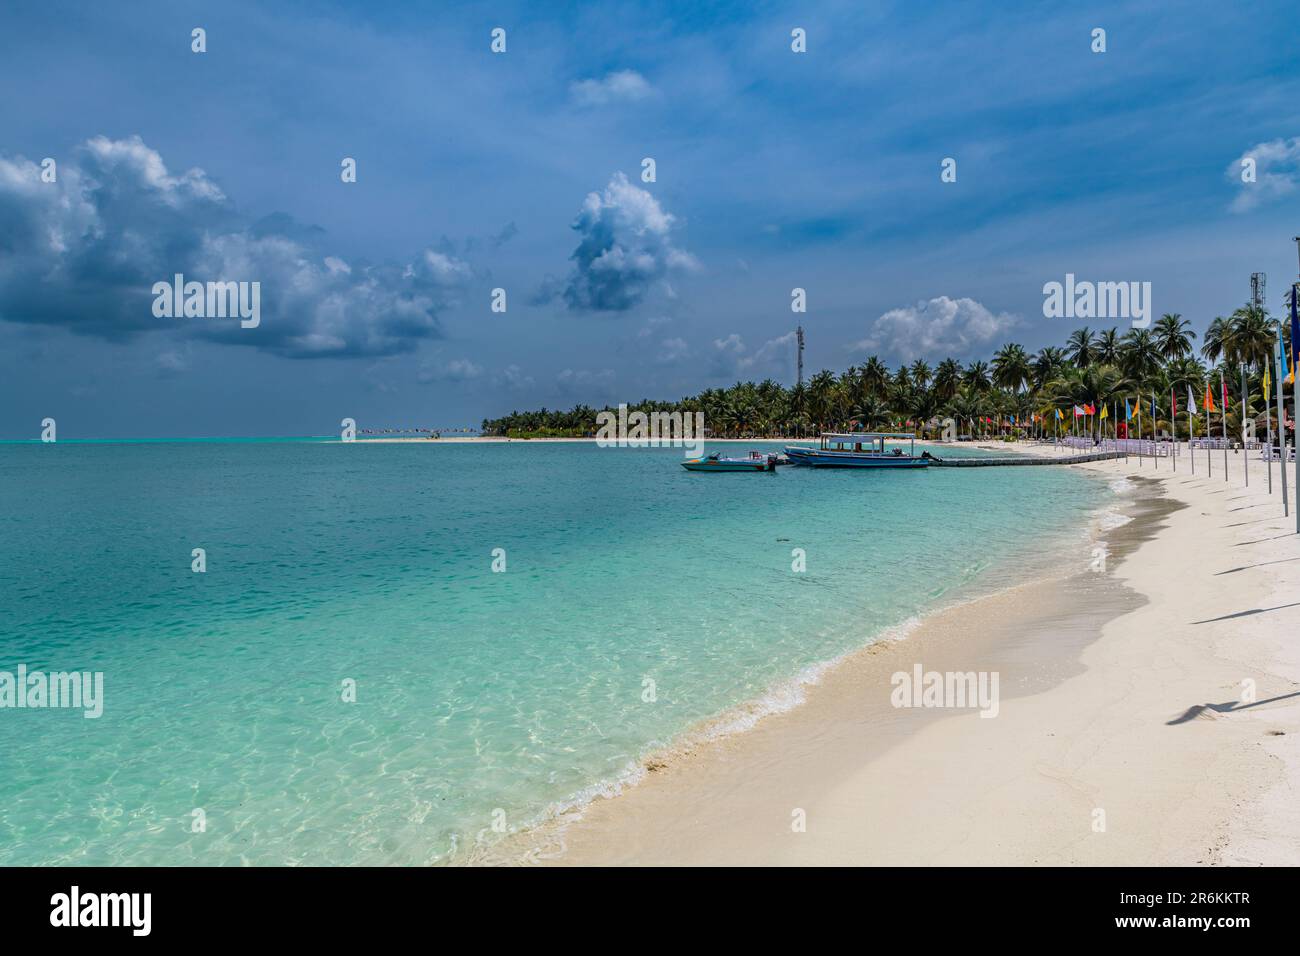 White sand beach with many flags, Bangaram island, Lakshadweep archipelago, Union territory of India, Indian Ocean, Asia Stock Photo